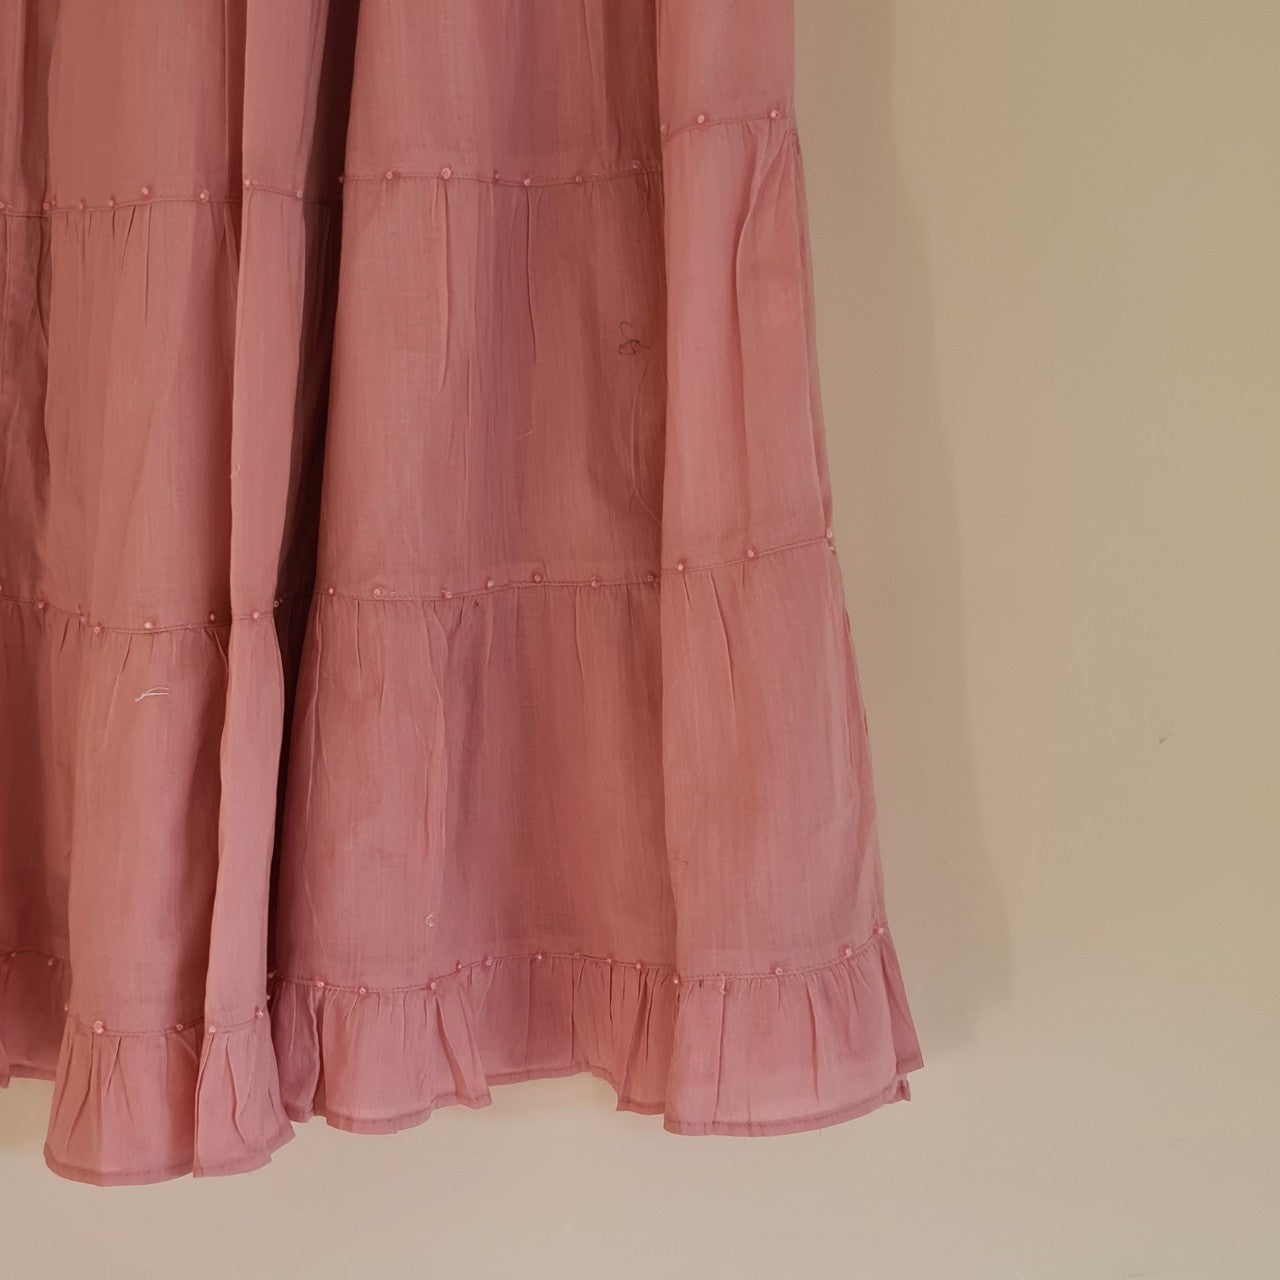 Cotton Sequin Maxi Skirt - Assorted Colours